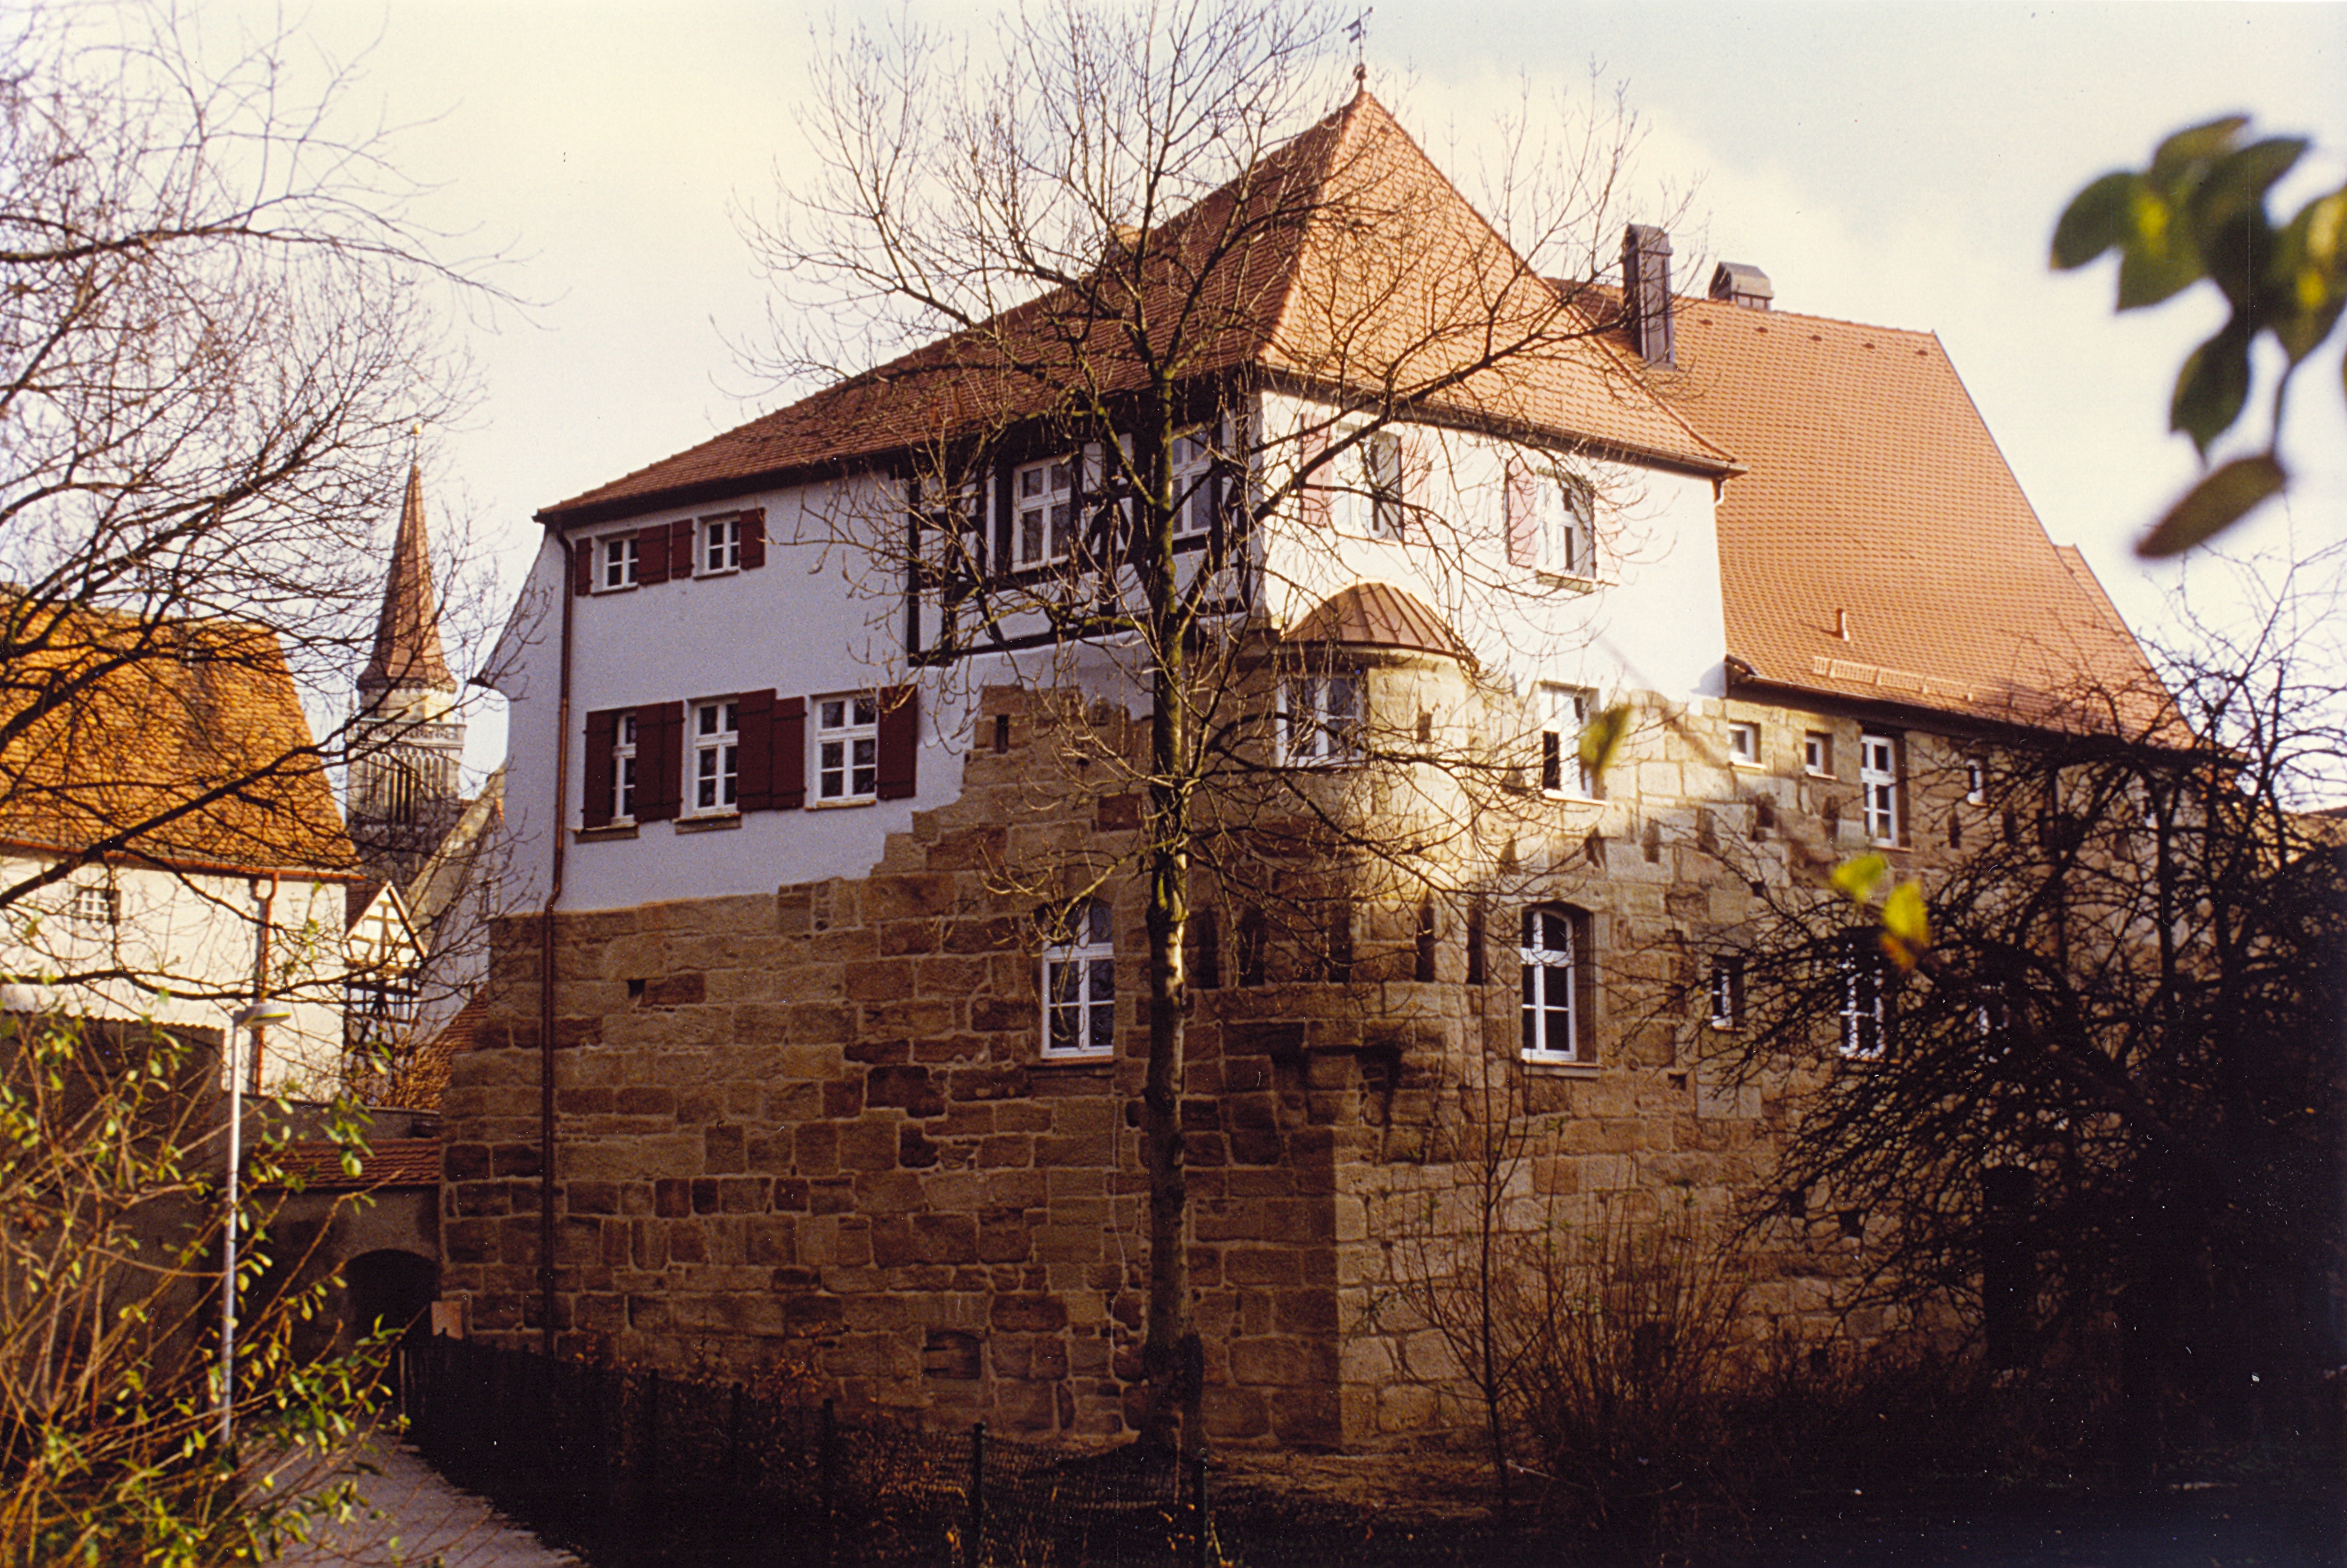 Image 'Herberge "Zur Heimat" ("Homeland" Shelter), Ansbach'